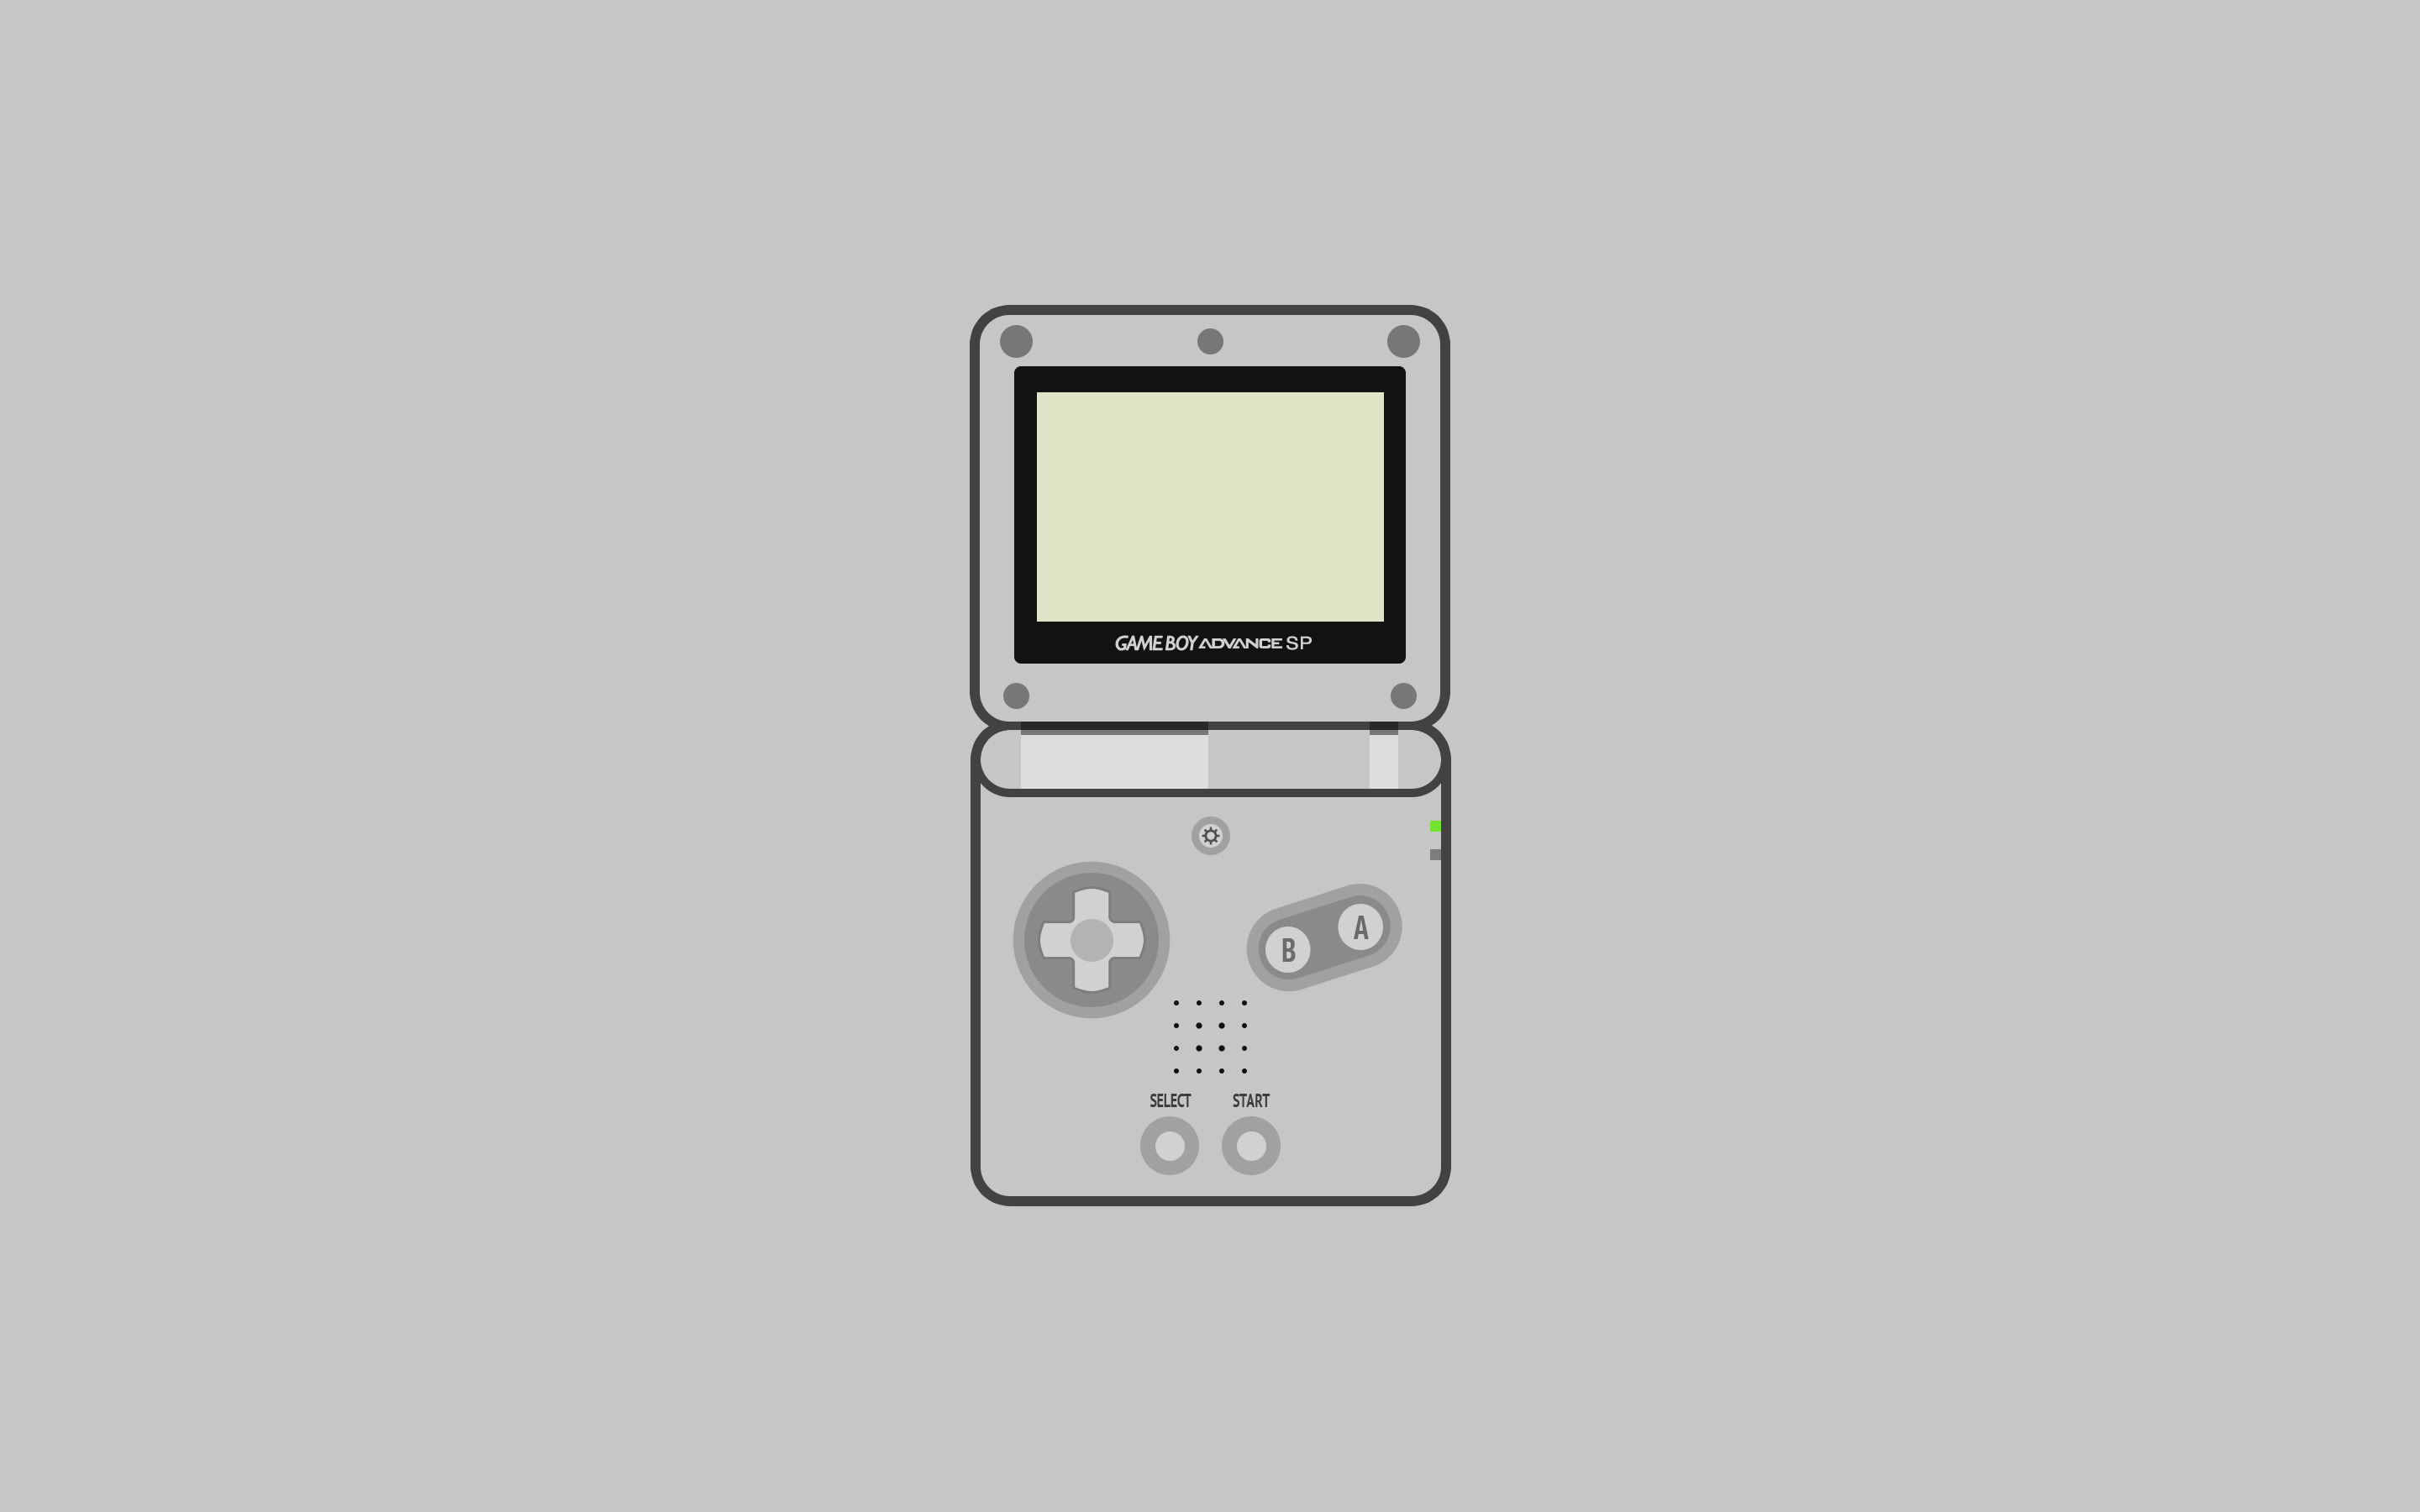 GameBoy Advance SP, Consoles, Video Games, Minimalism, Nintendo Wallpaper